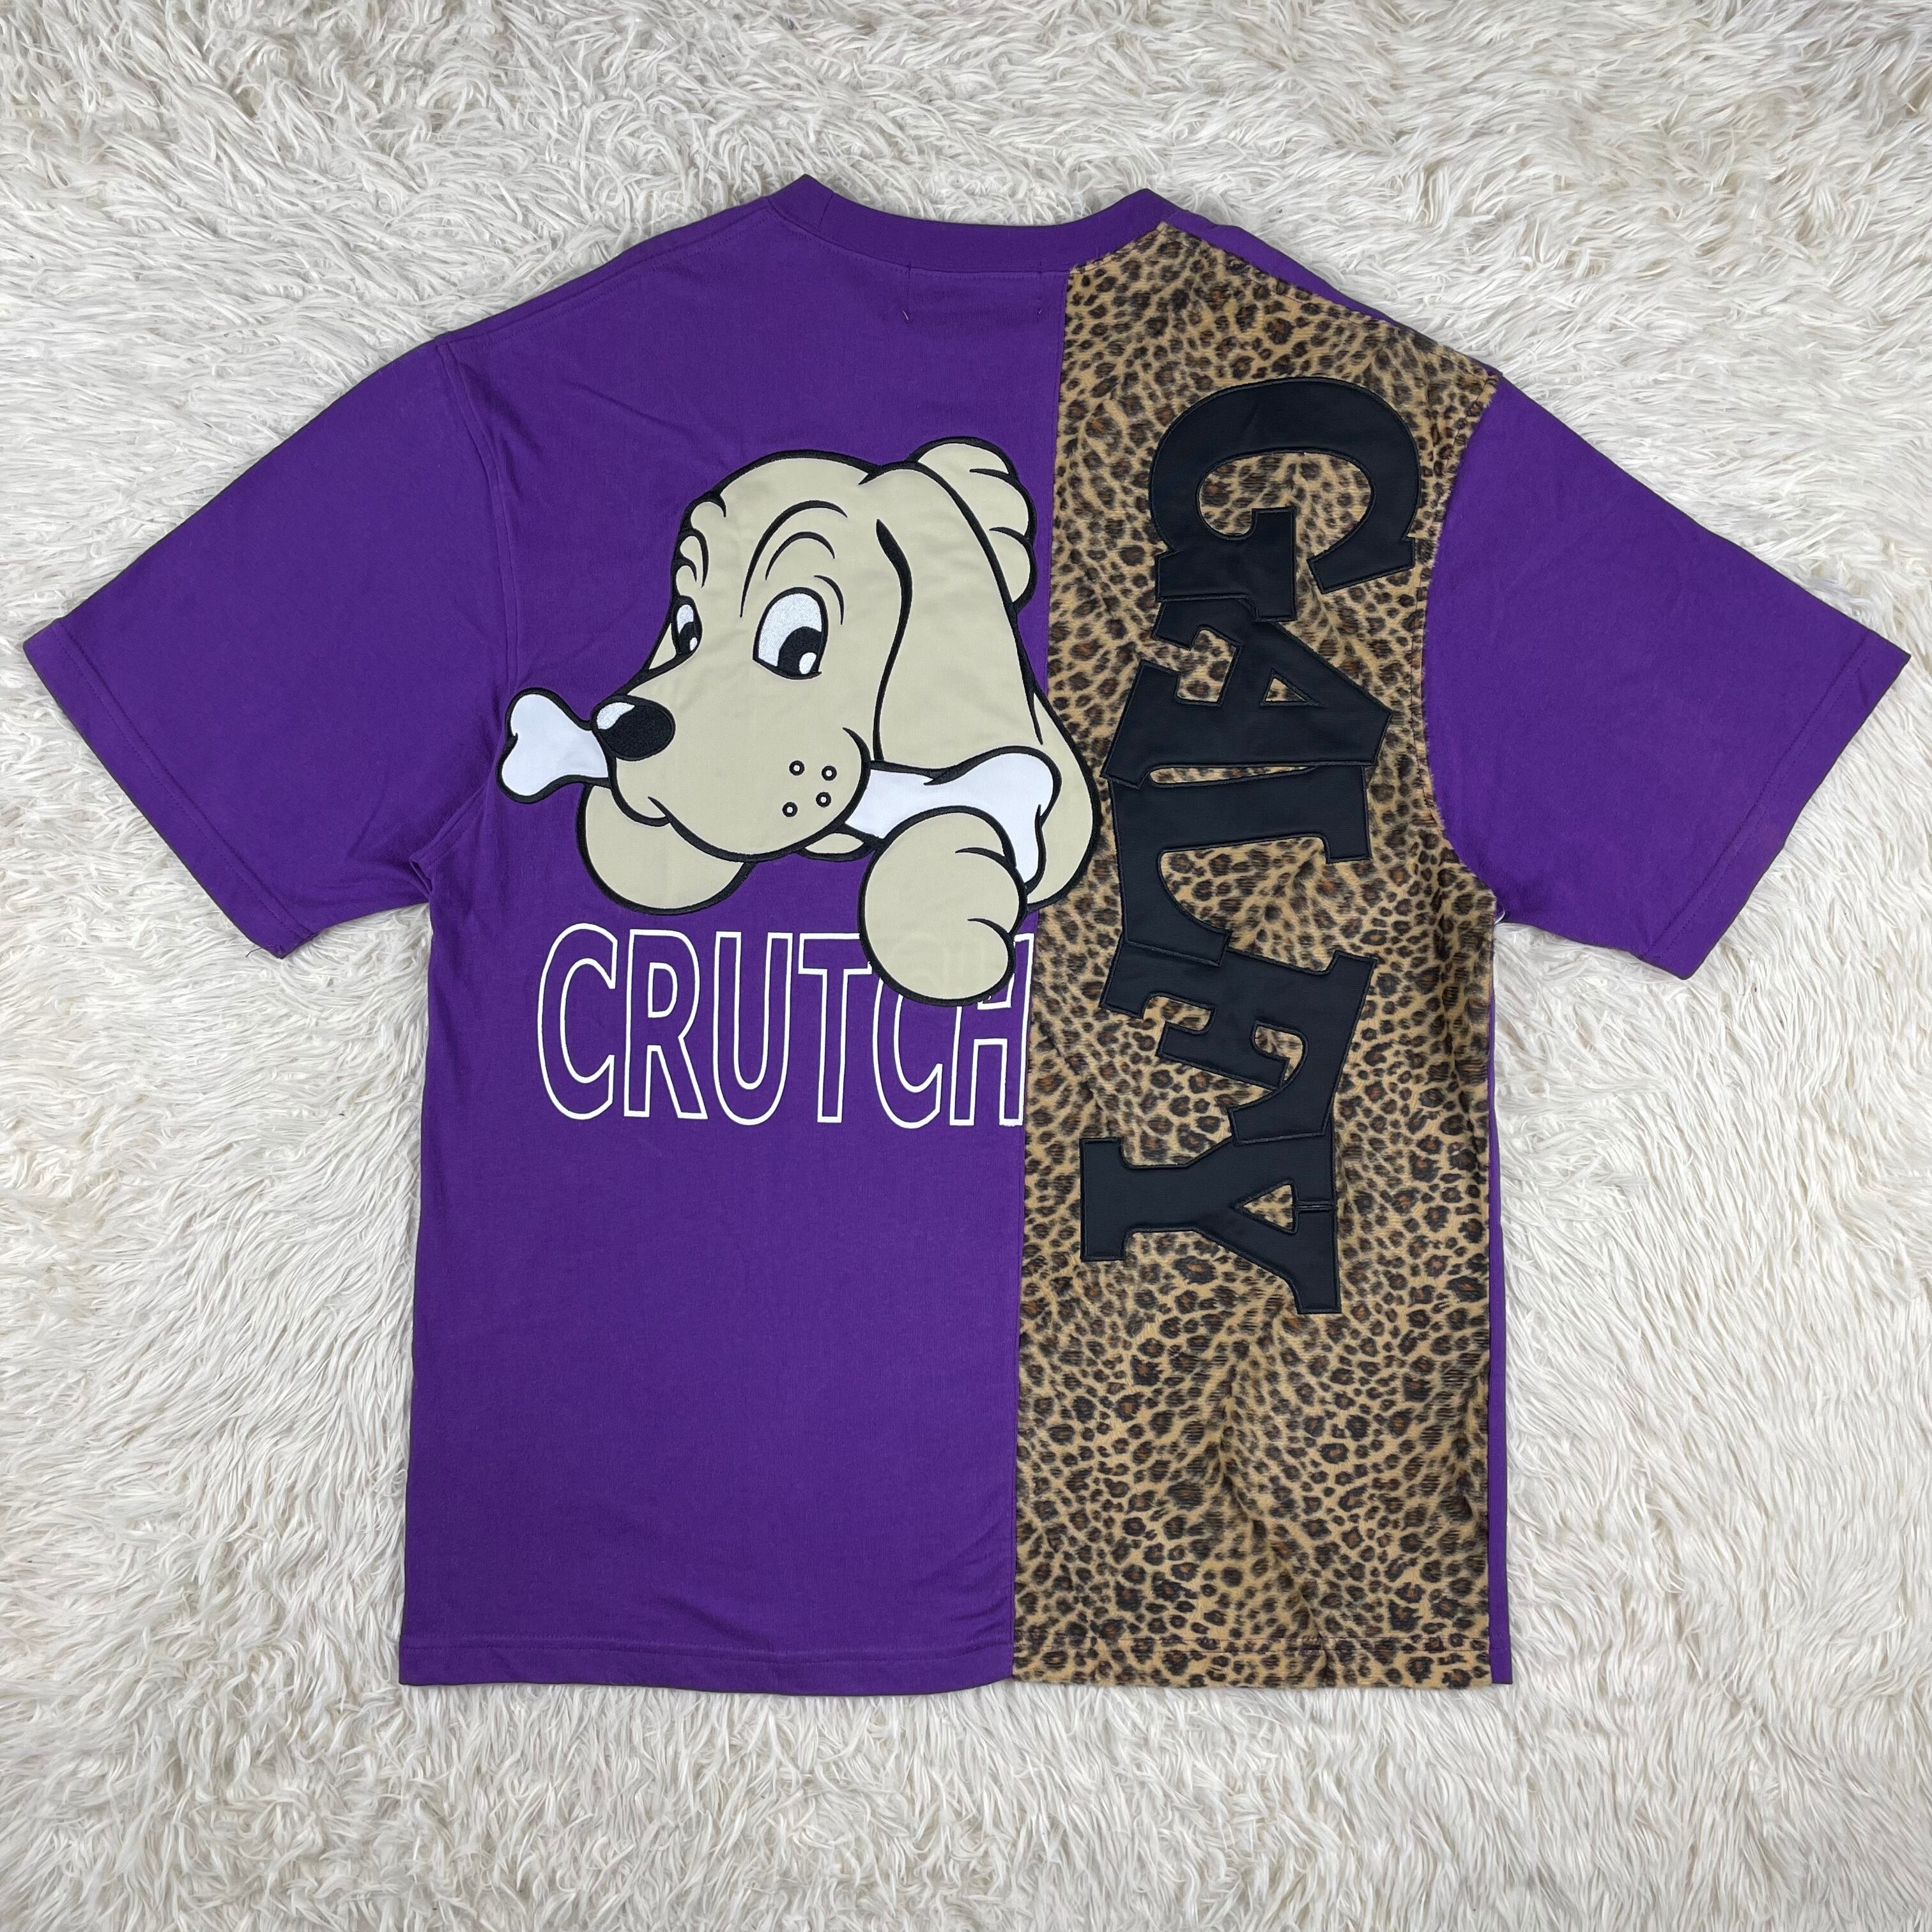 90s ガルフィー GALFY Tシャツ ビッグロゴ 刺繍 CRUTCH 豹柄